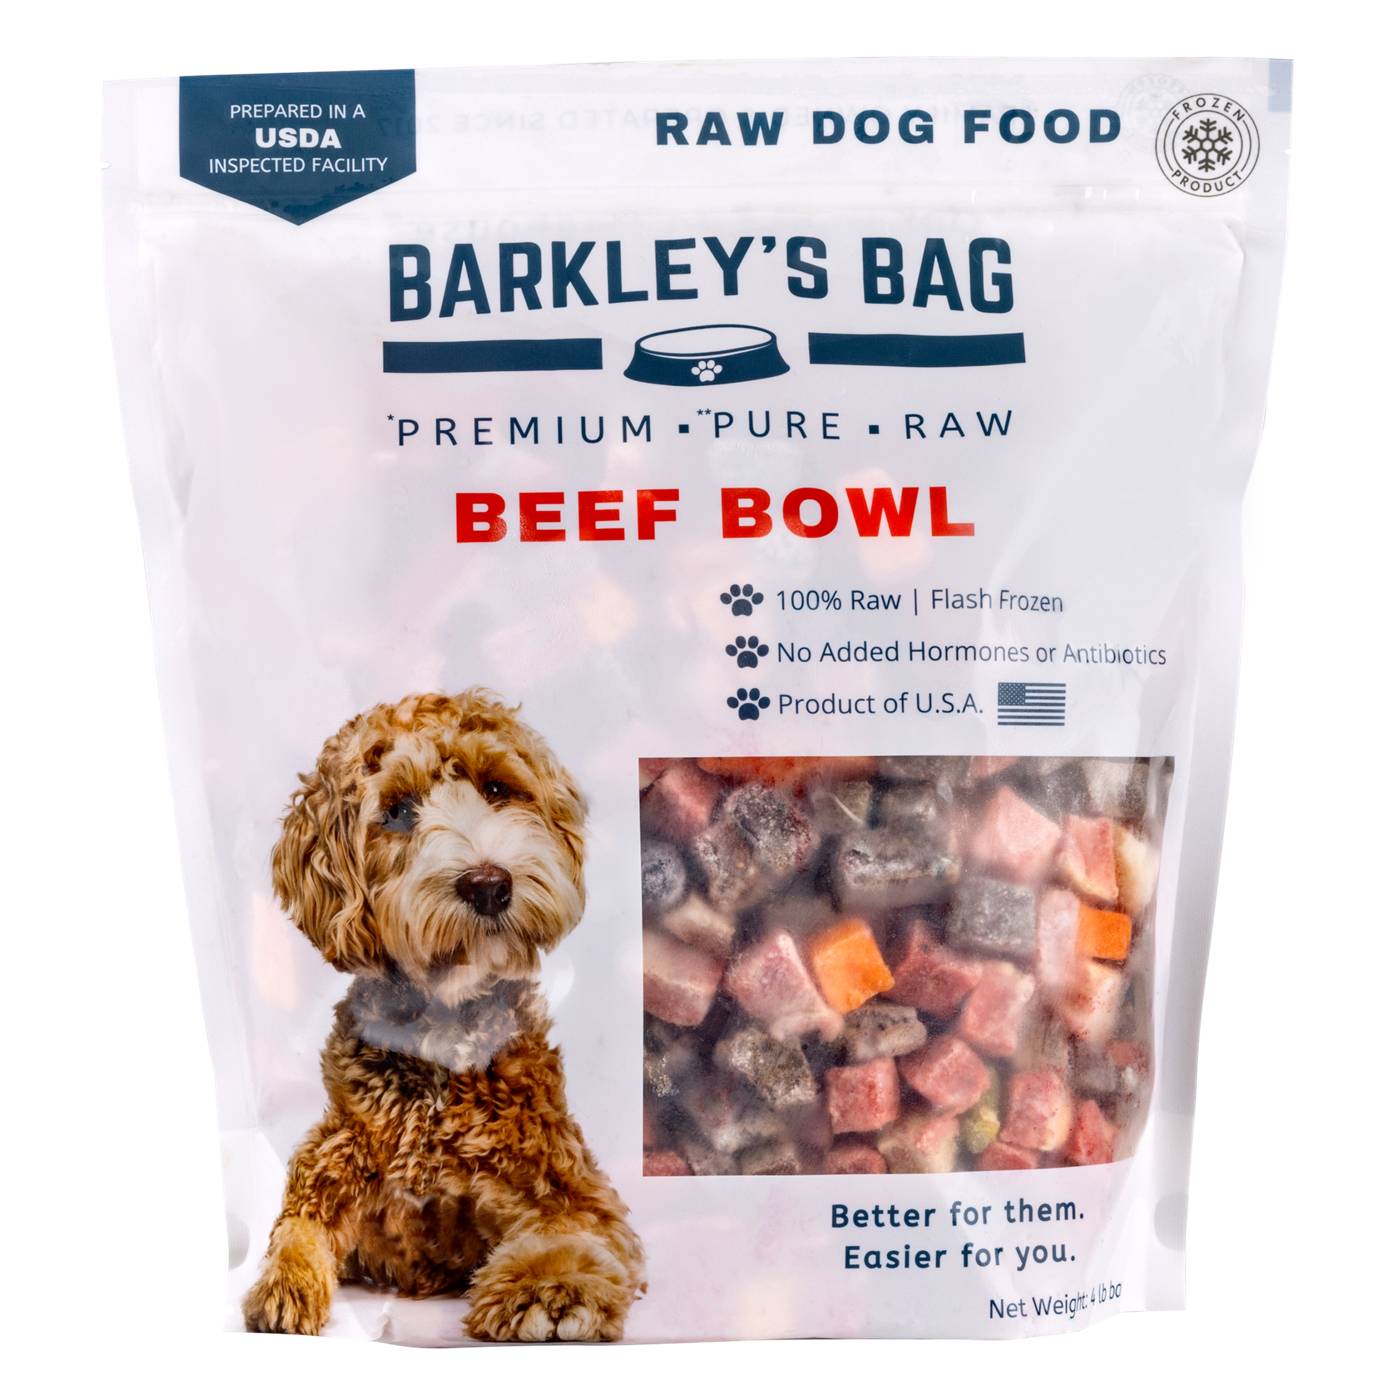 Barkley's Bag Beef Bowl Raw Dog Food; image 1 of 2